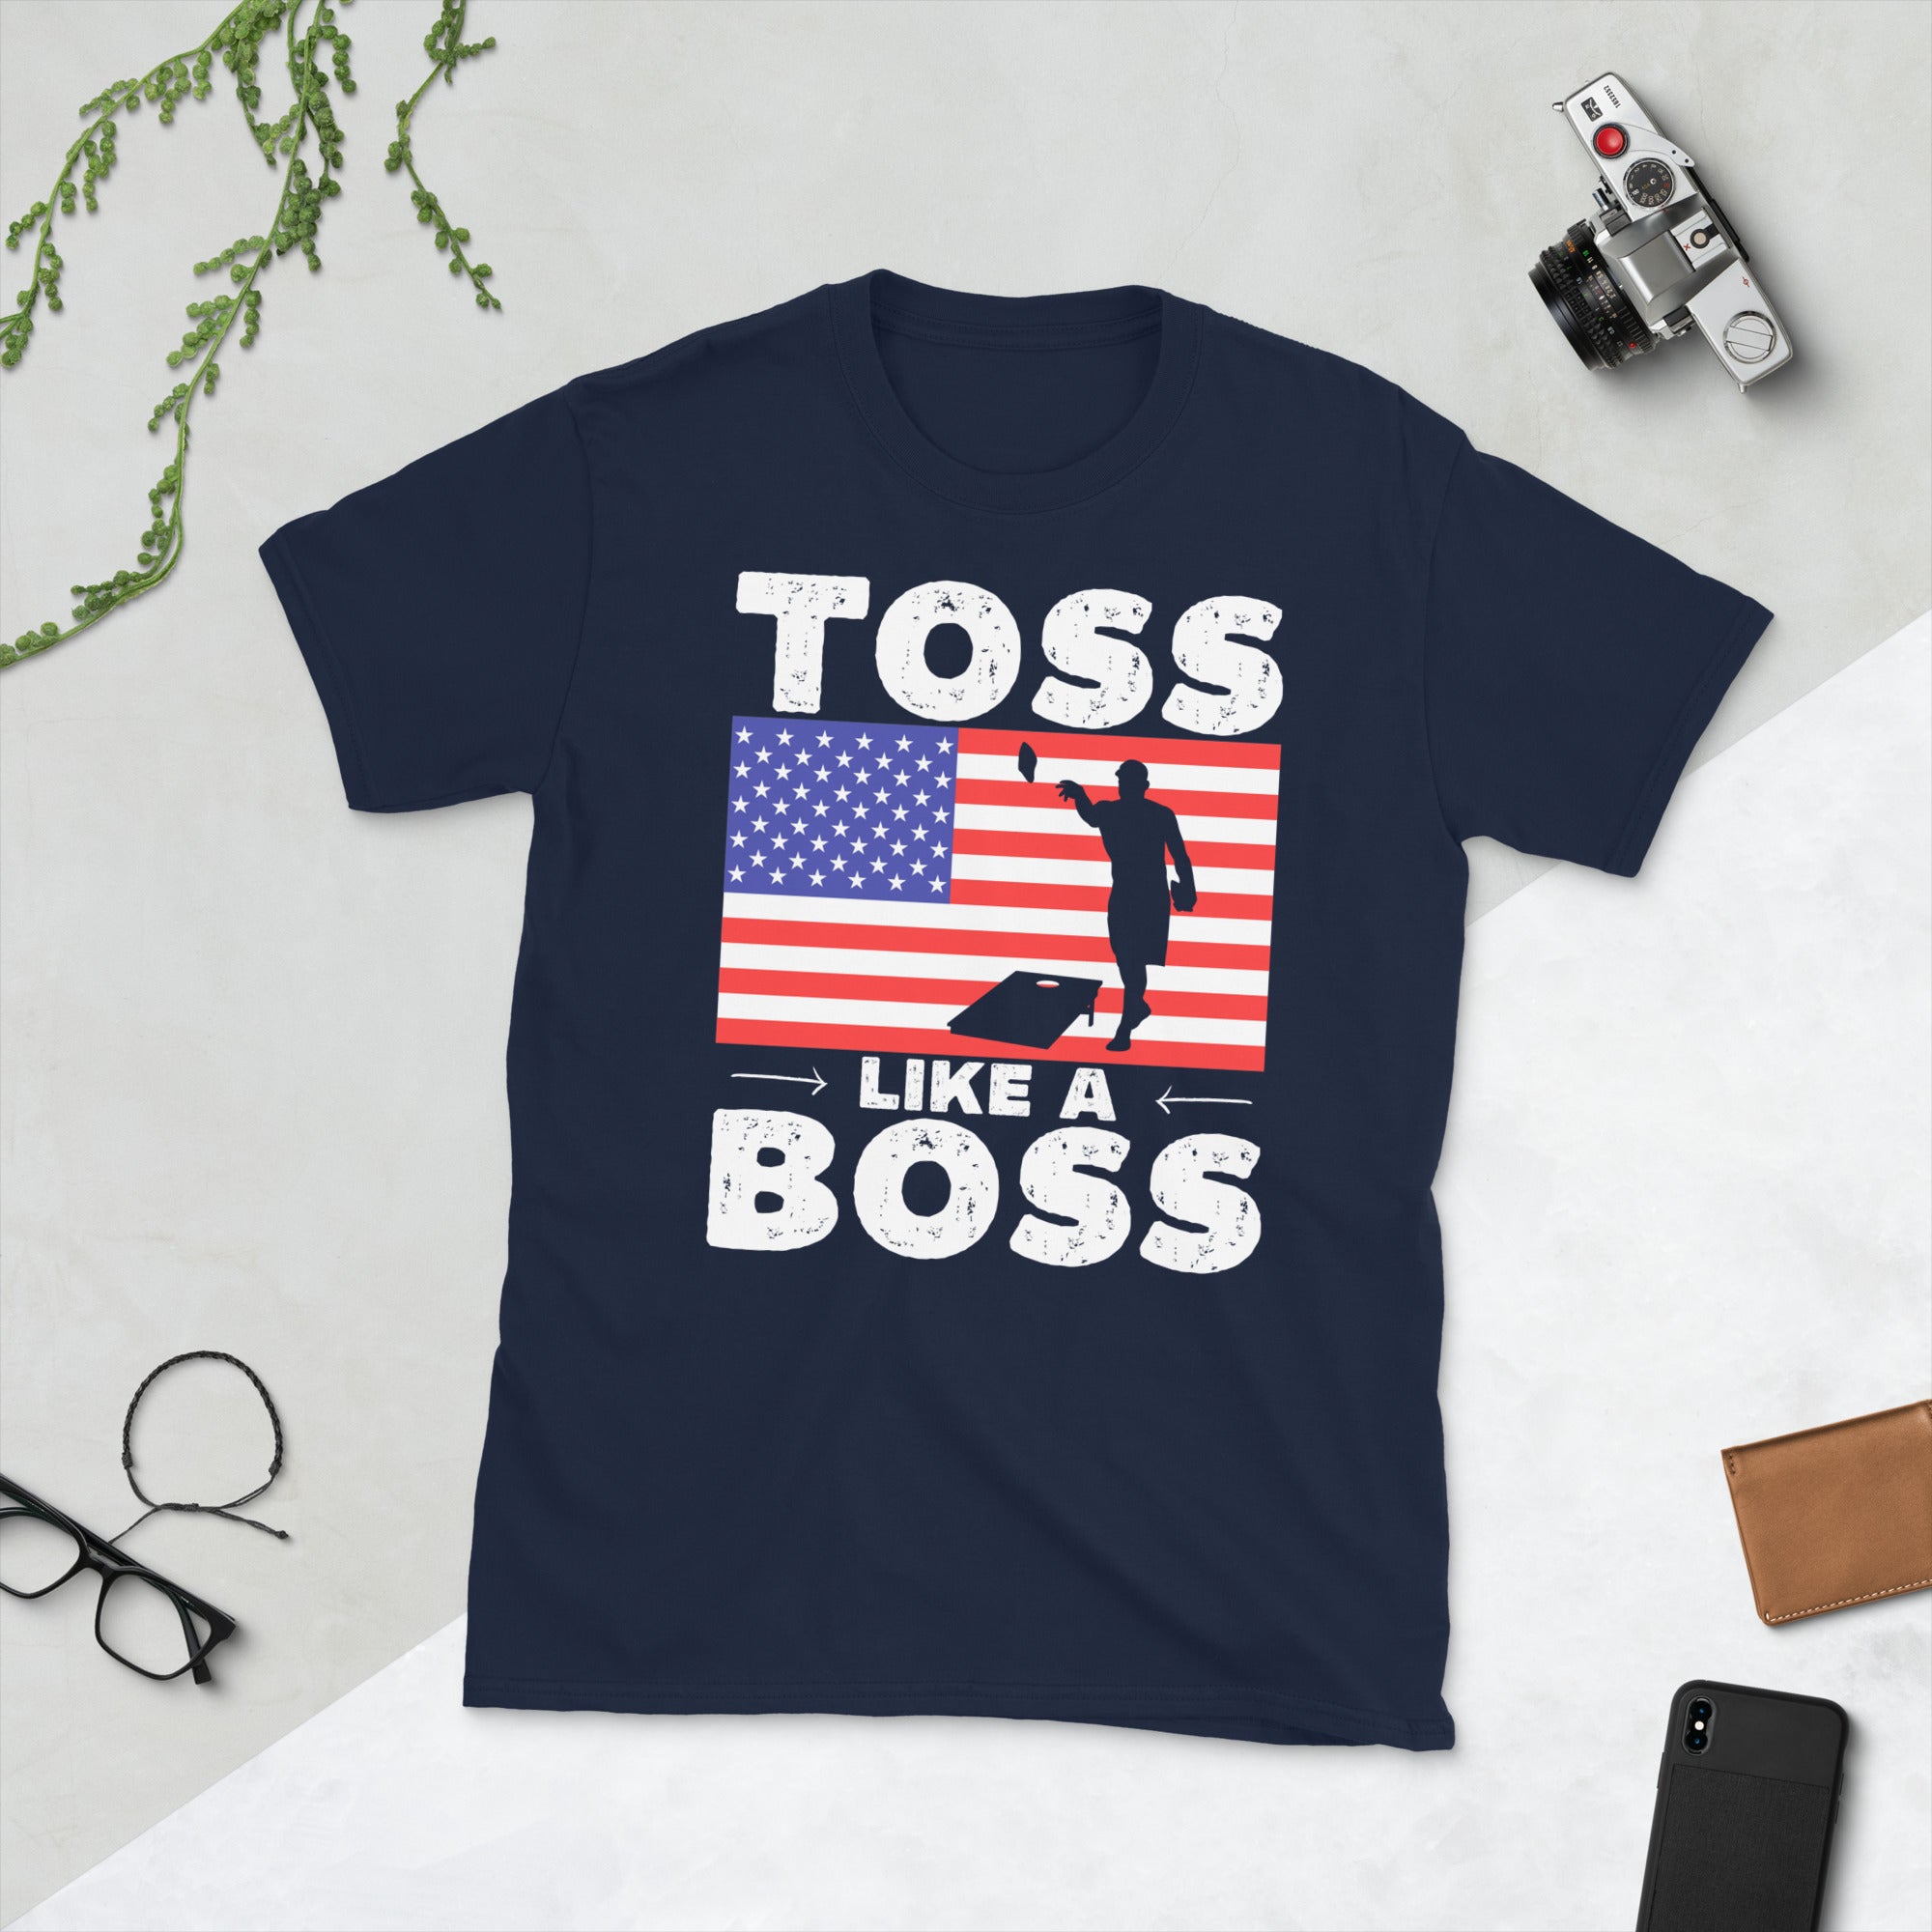 Toss Like A Boss, Funny Cornhole Shirt, Corn Hole Player Gifts, Cornhole Board, Cornhole Tees, American Flag, Cornhole Player Tshirt